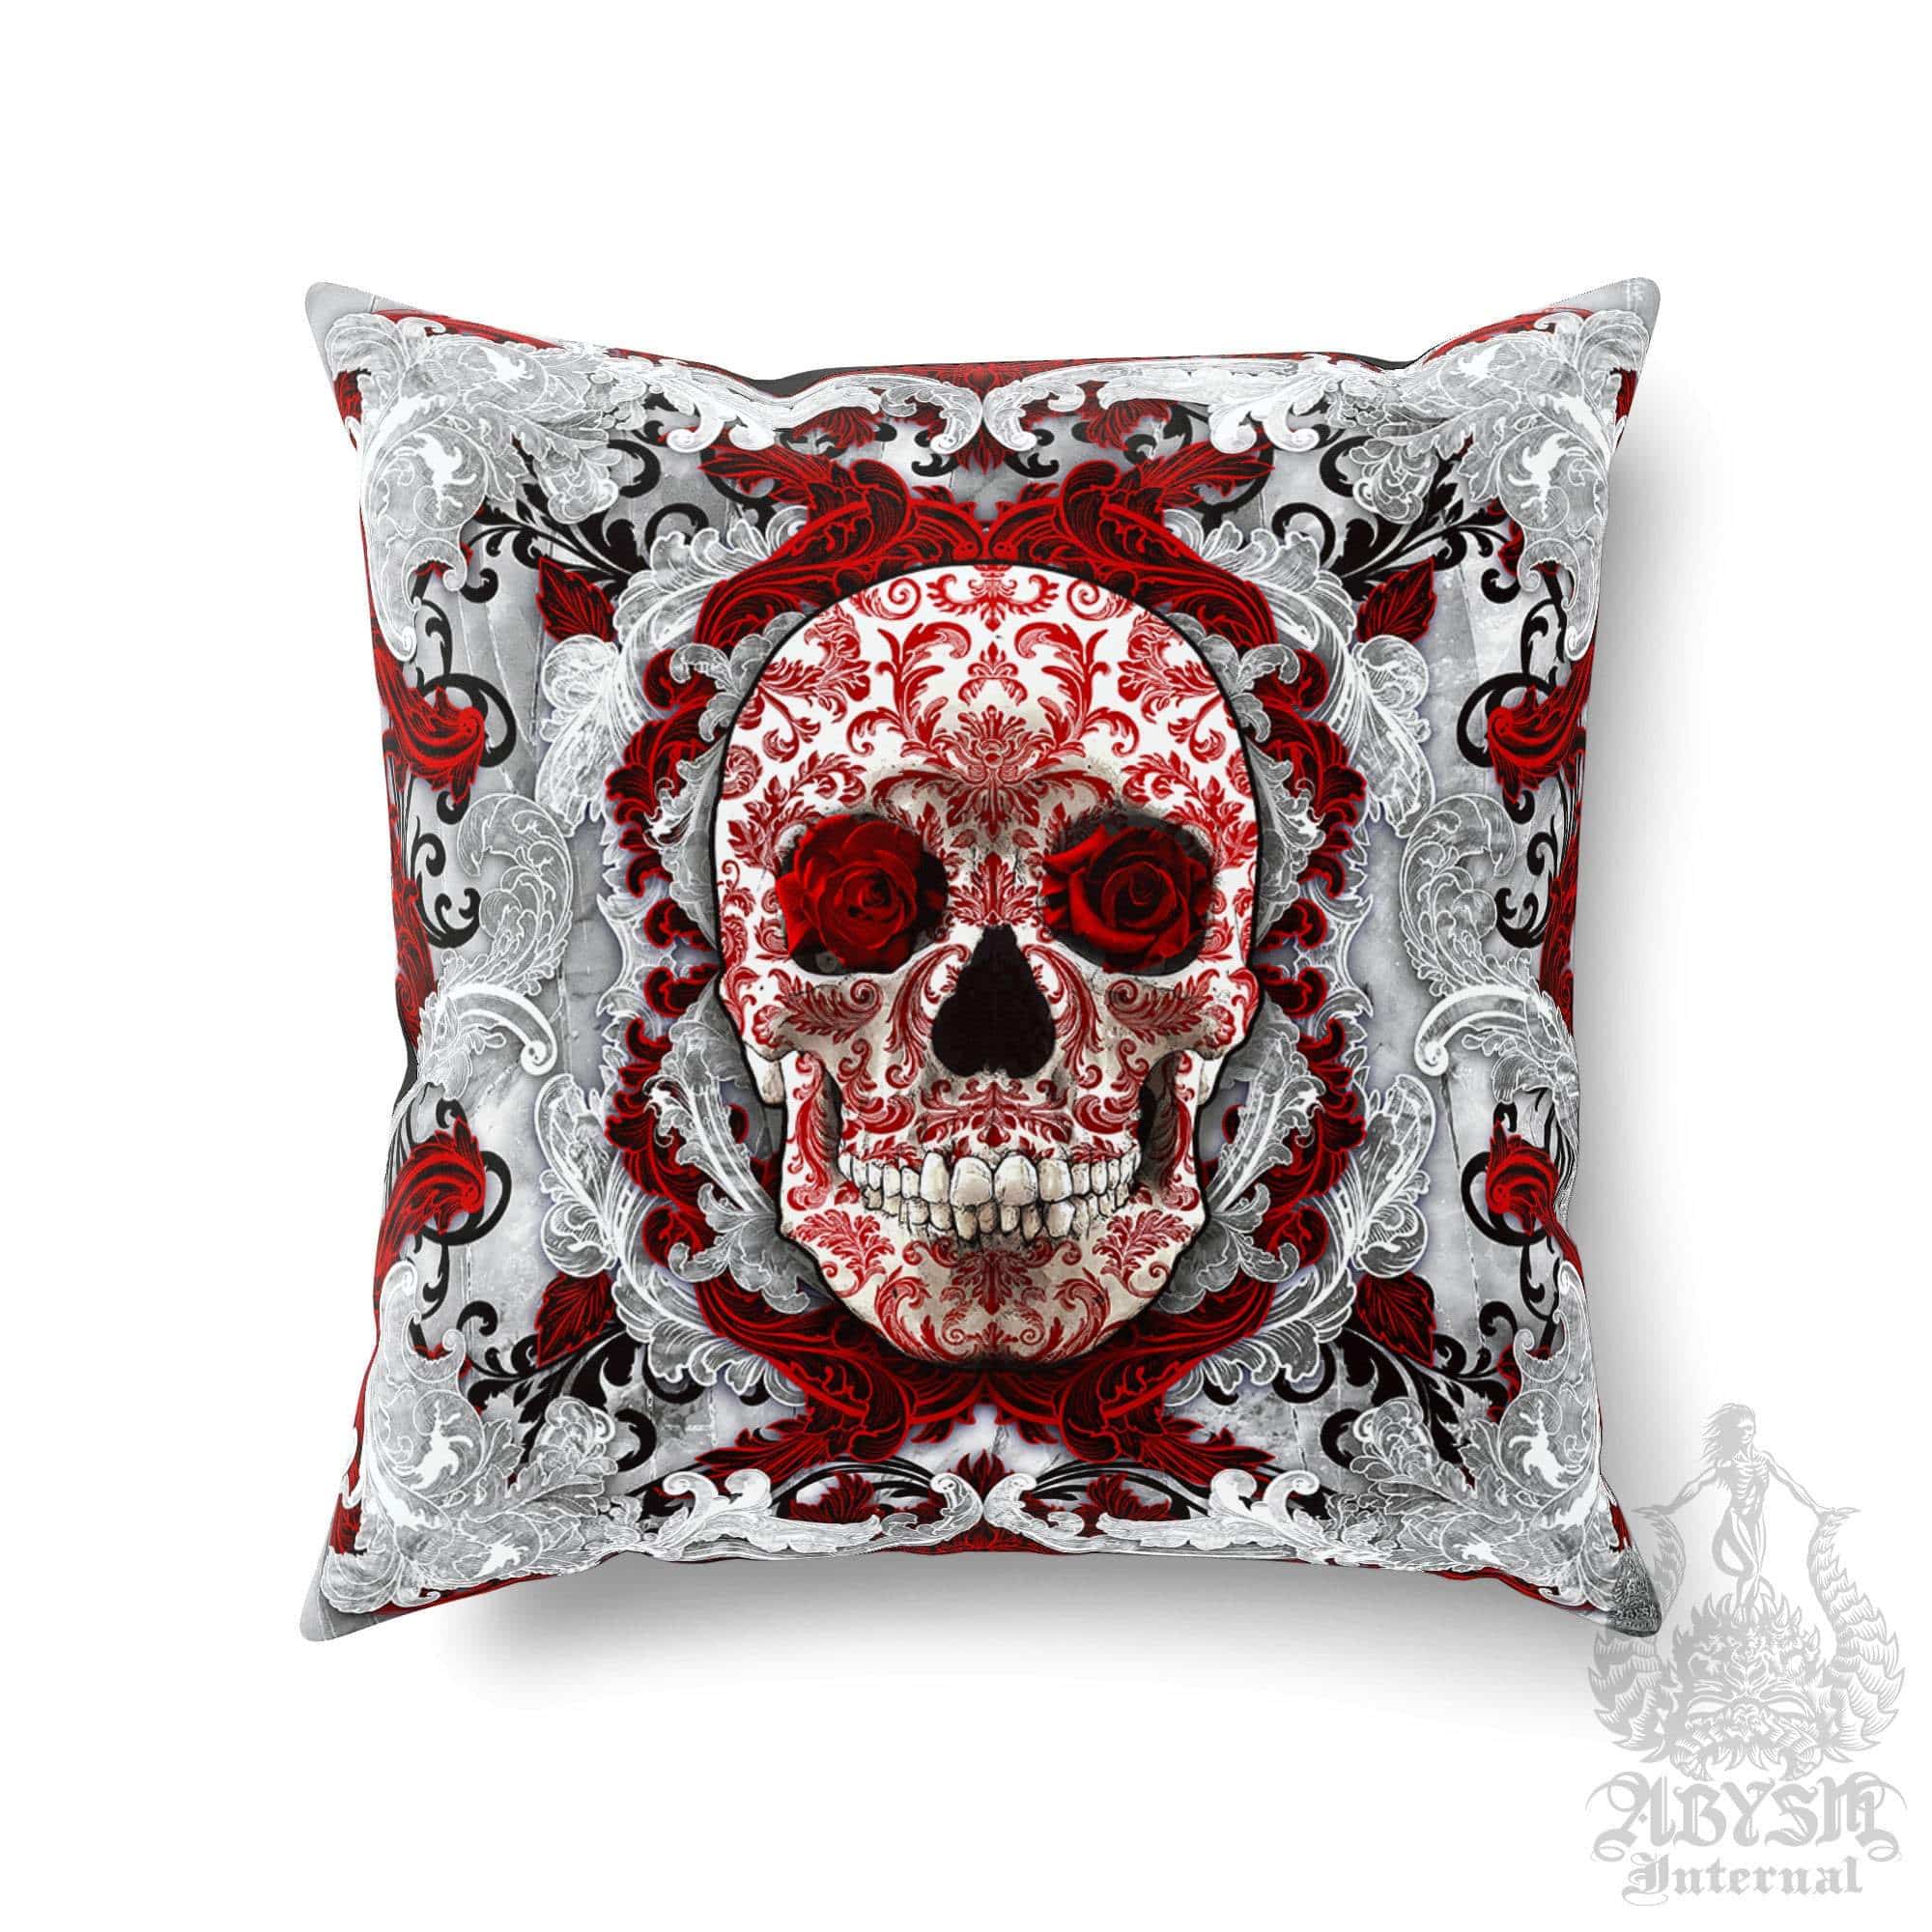 Skull Throw Pillow, Decorative Accent Cushion, Gothic Room Decor, Macabre Art, Alternative Home - Bloody White Goth - Abysm Internal